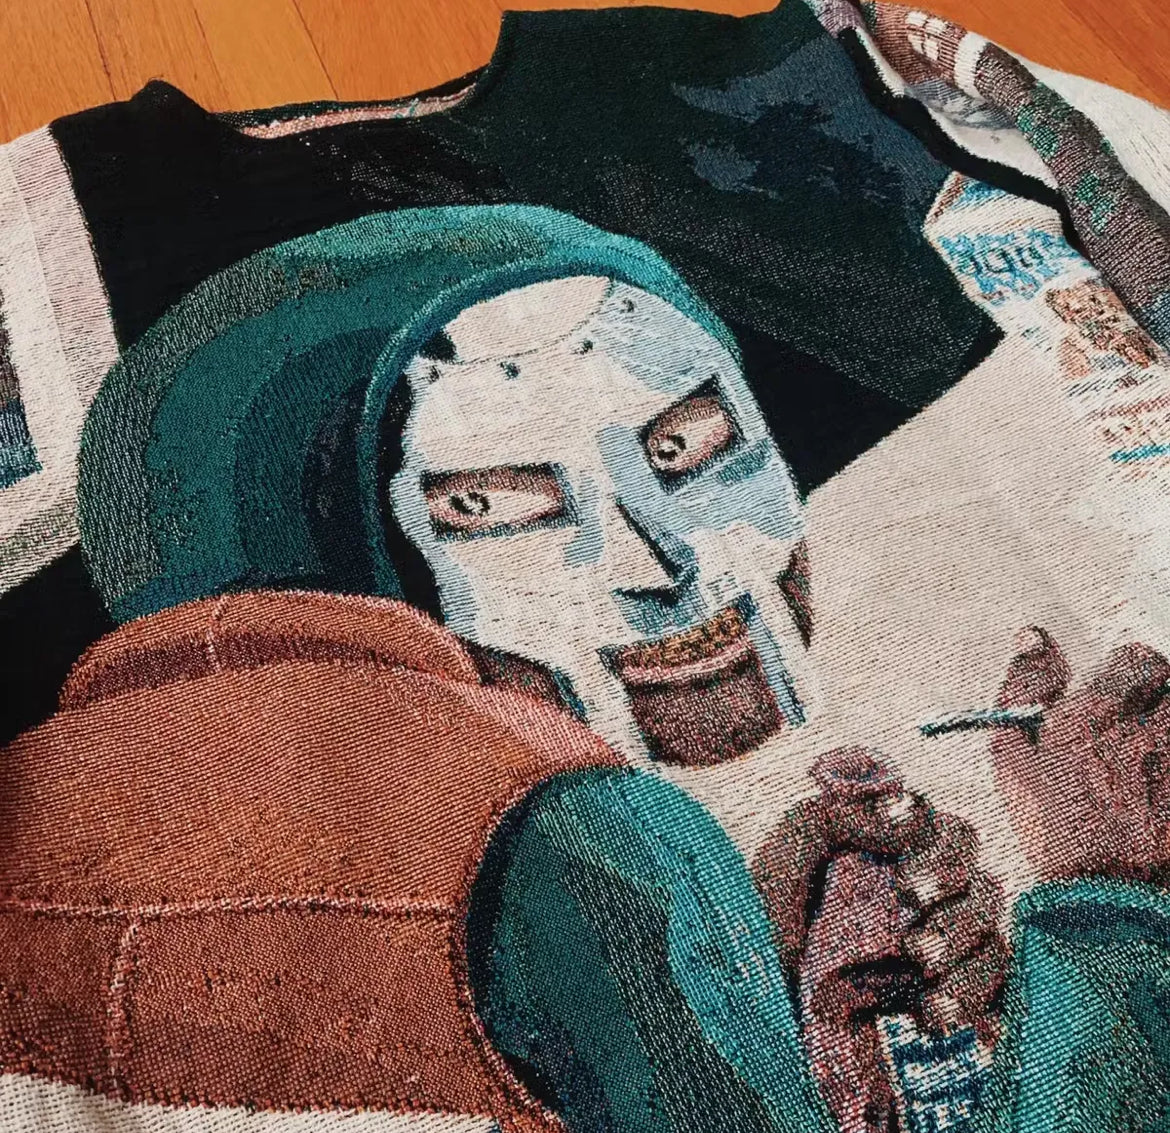 MF Doom Tapestry Sweatshirt